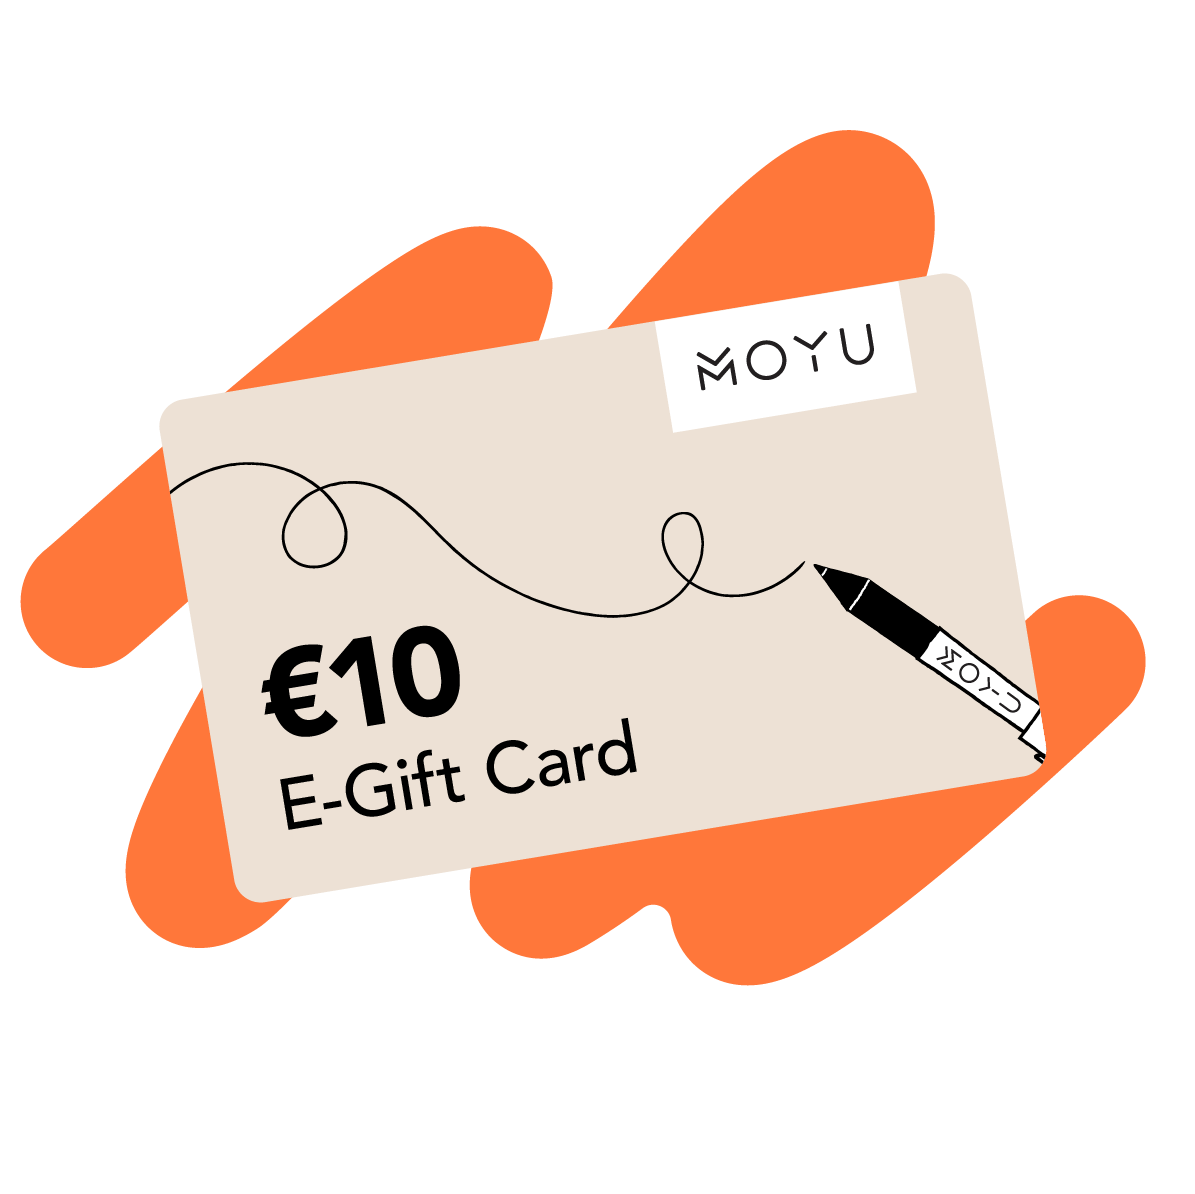 moyu-gift-card-10-euros